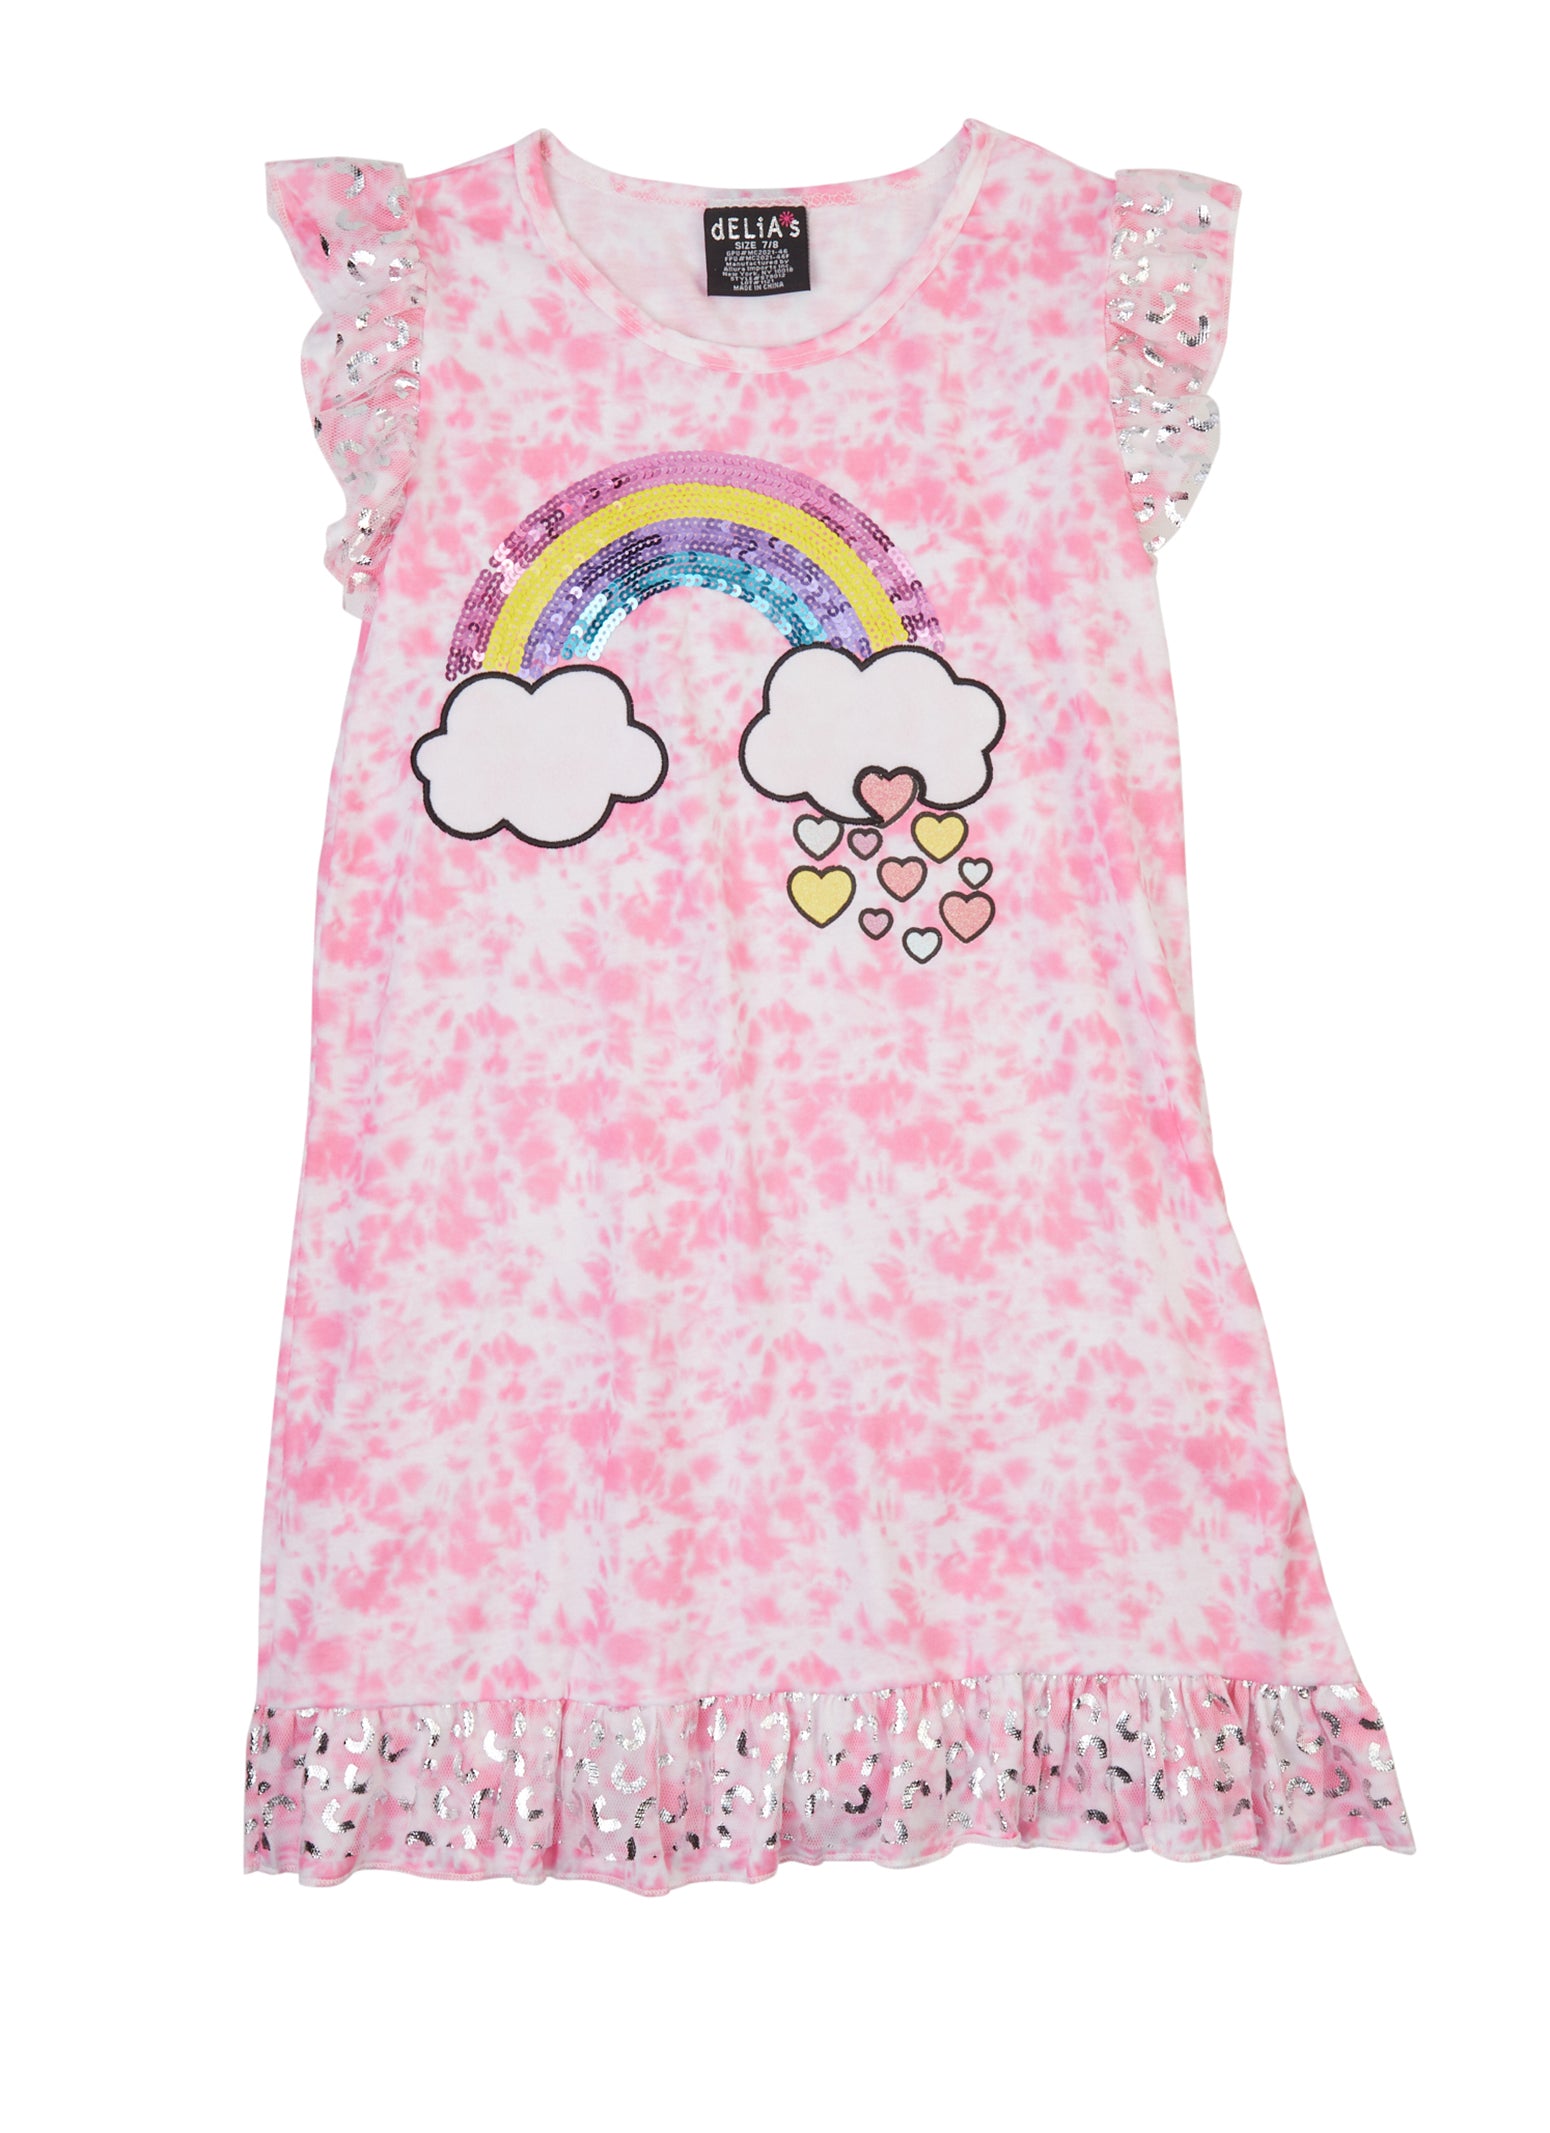 Girls Sequin Rainbow Tie Dye Nightgown, Pink, Size 10-12